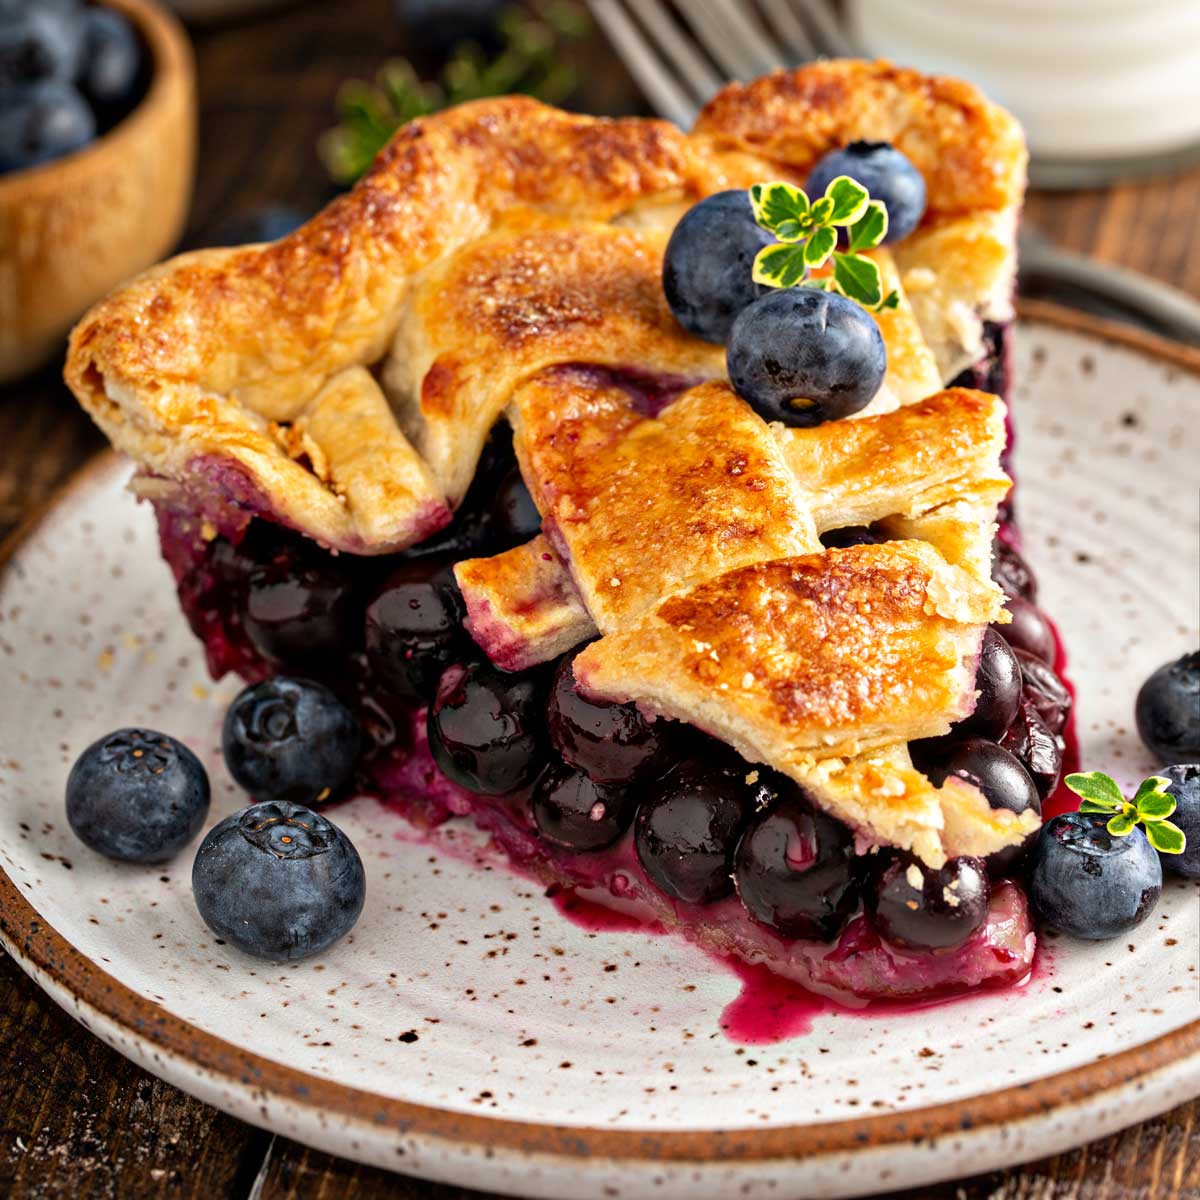 Easiest Ever Blueberry Pie Recipe 